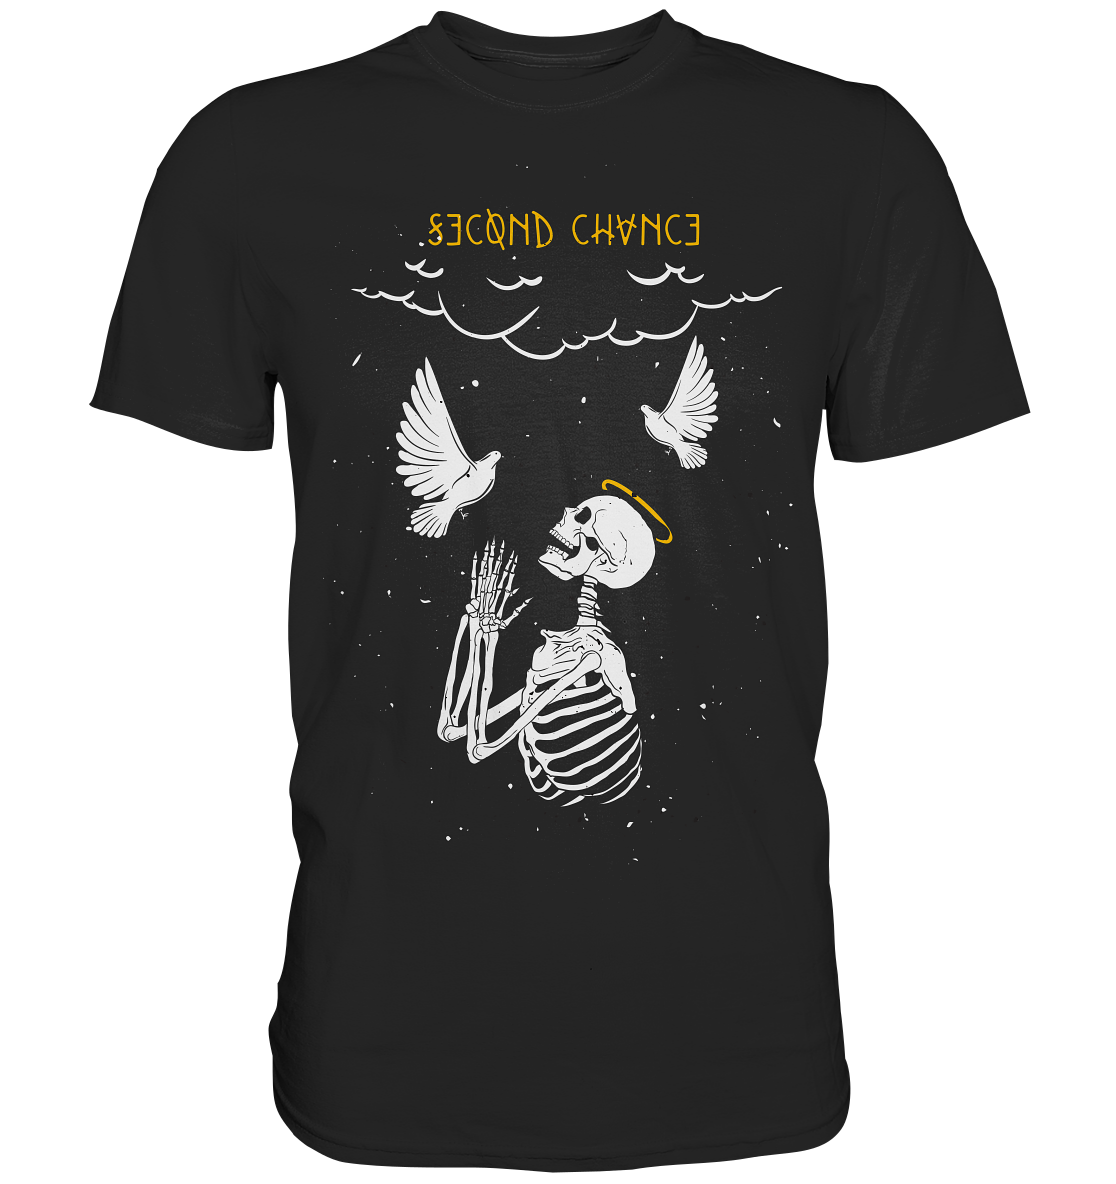 Second chance. Gothic Art Skulls - Premium Shirt